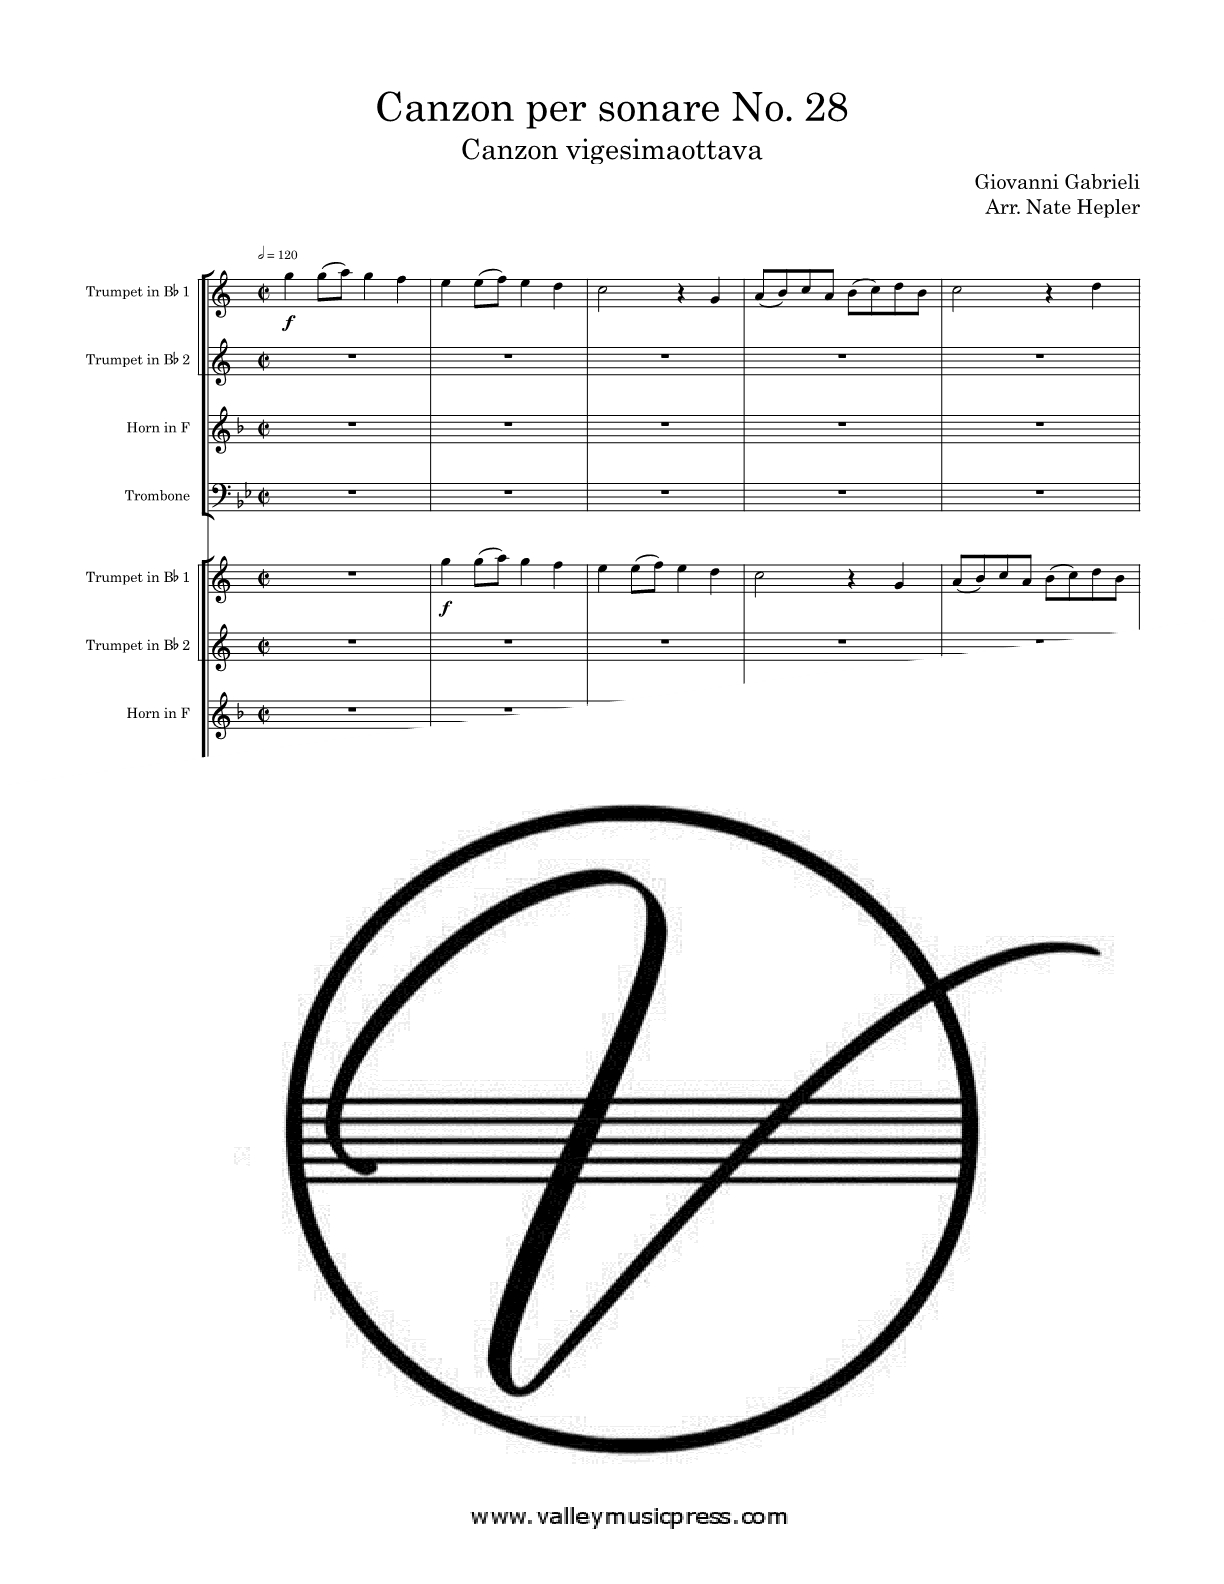 Gabrieli - Canzon per sonare No. 28 Vigesimaottava (Brass Octet)